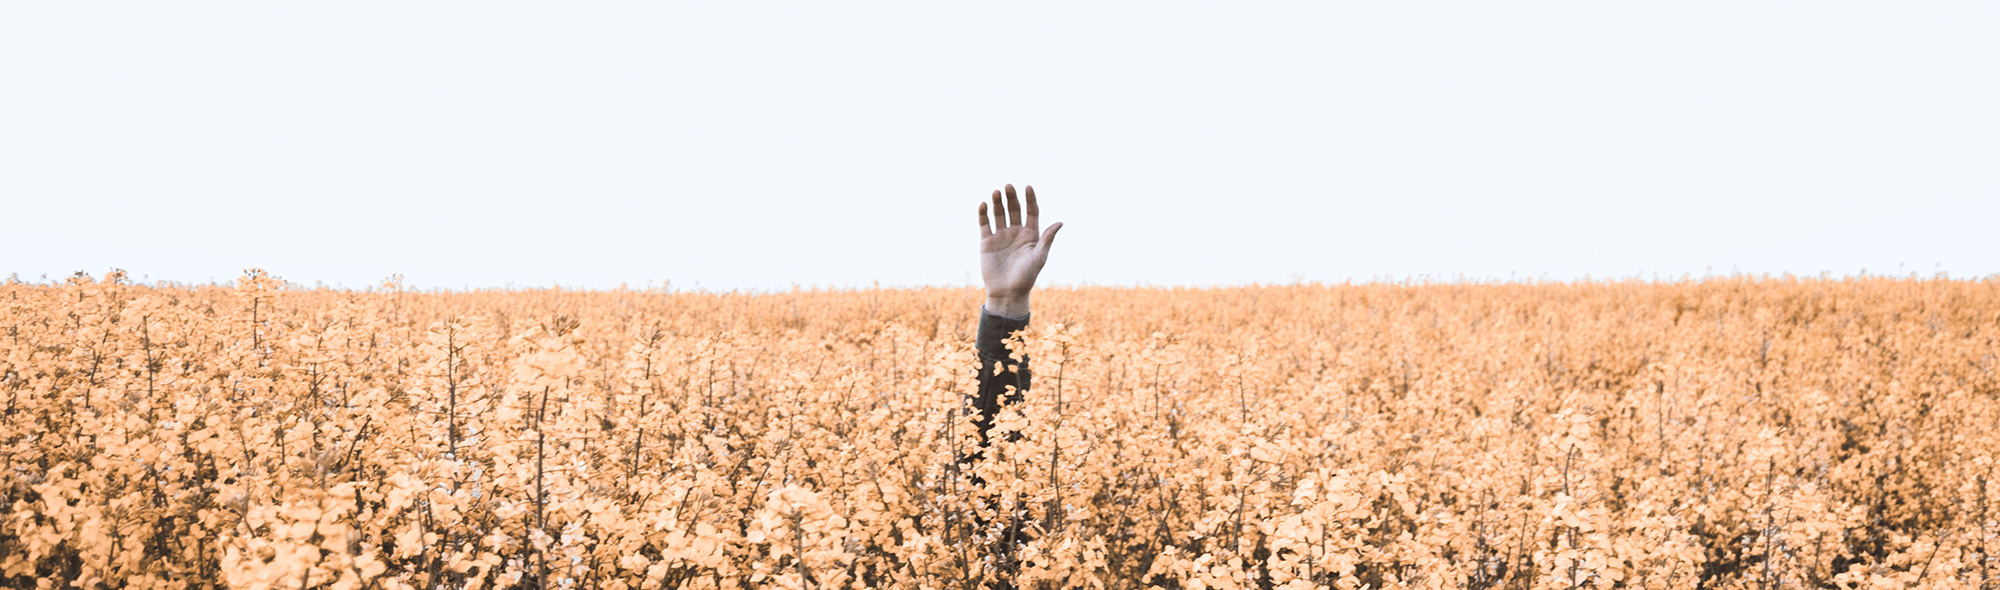 single hand raised in field for identification